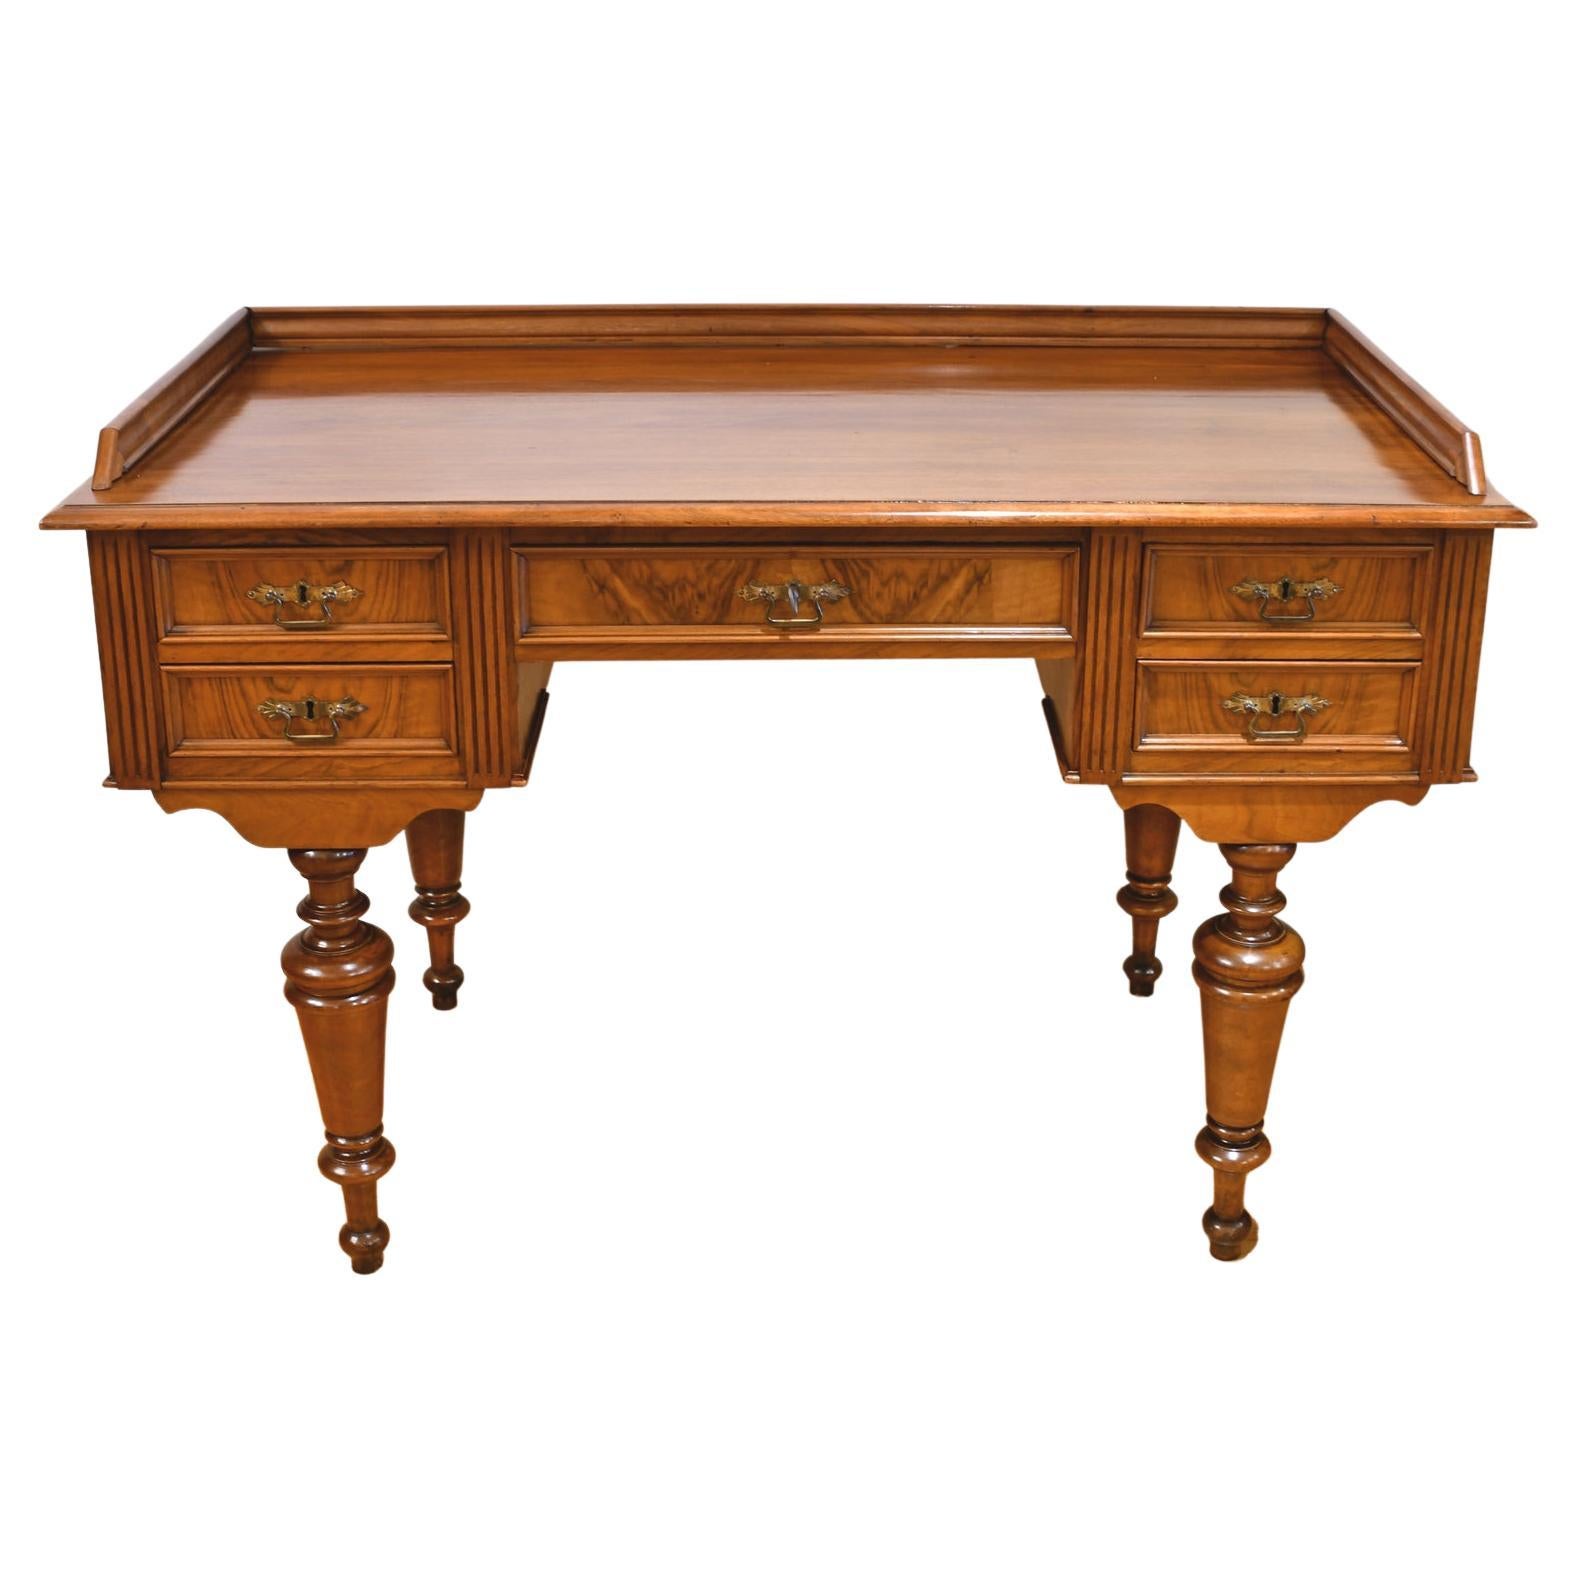 Antique Danish "Hans Christian Andersen" Desk or Writing Table in Figured Walnut